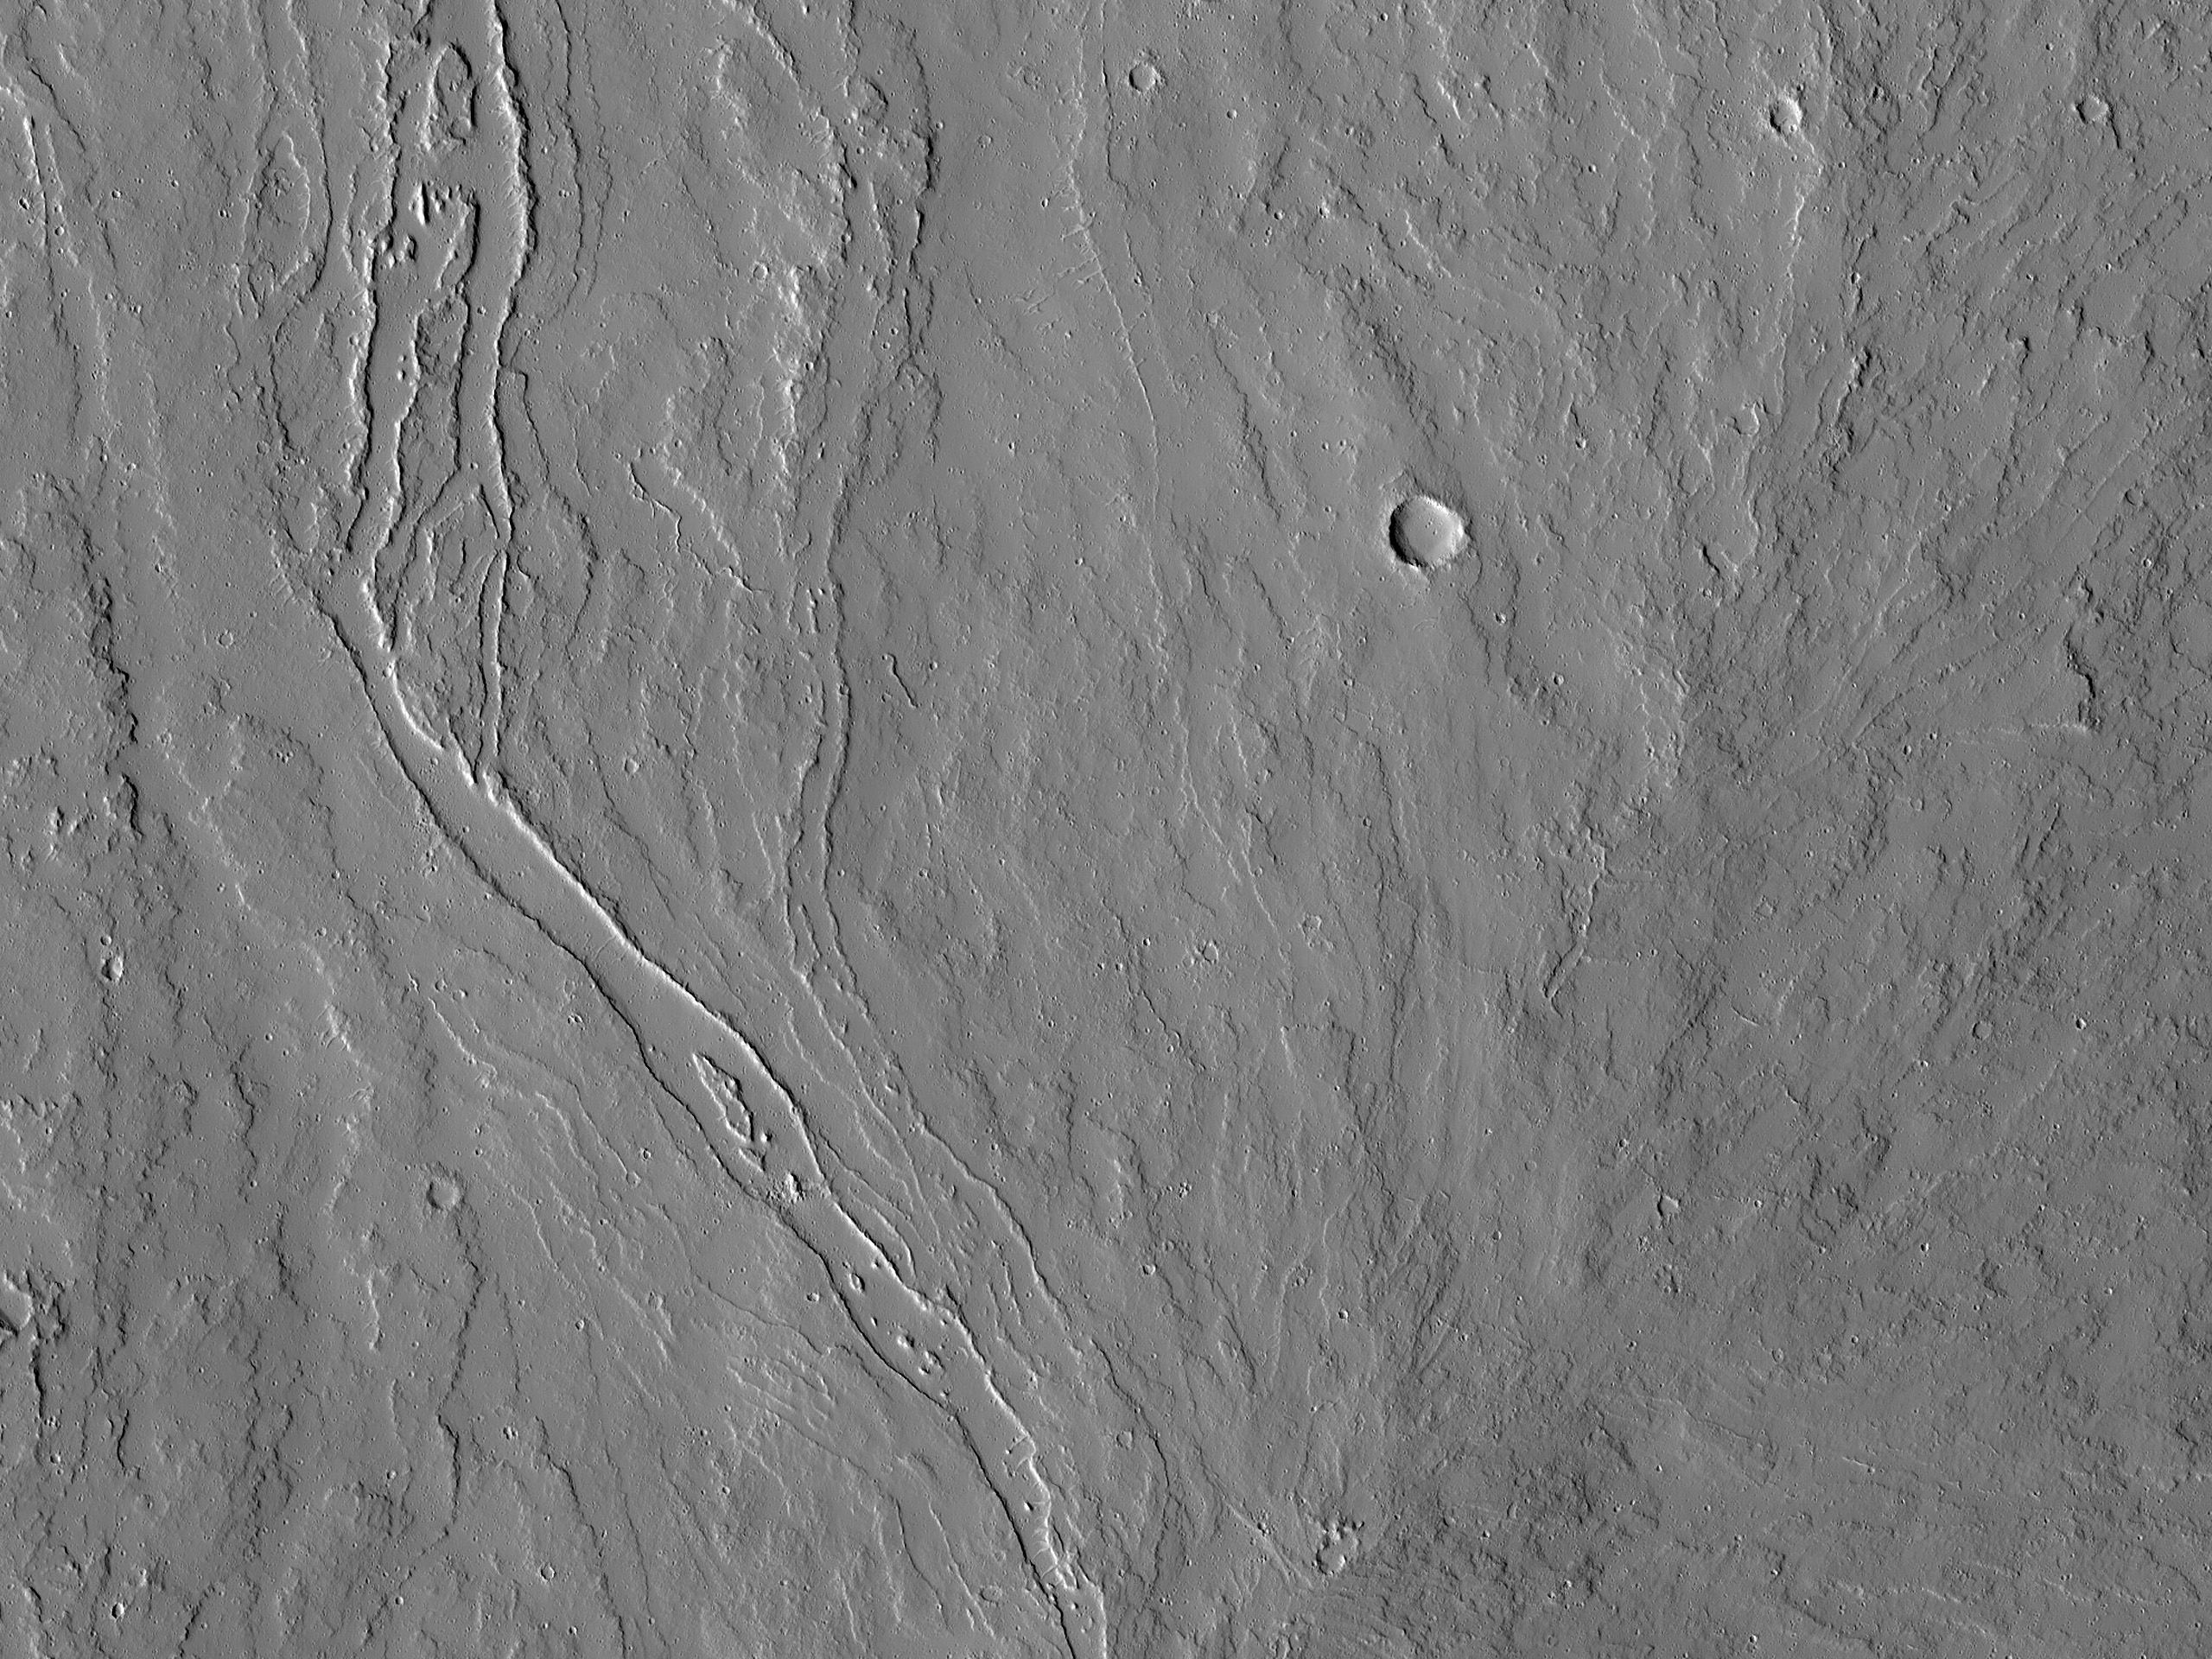 Flussi di lava alle pendici di Olympus Mons